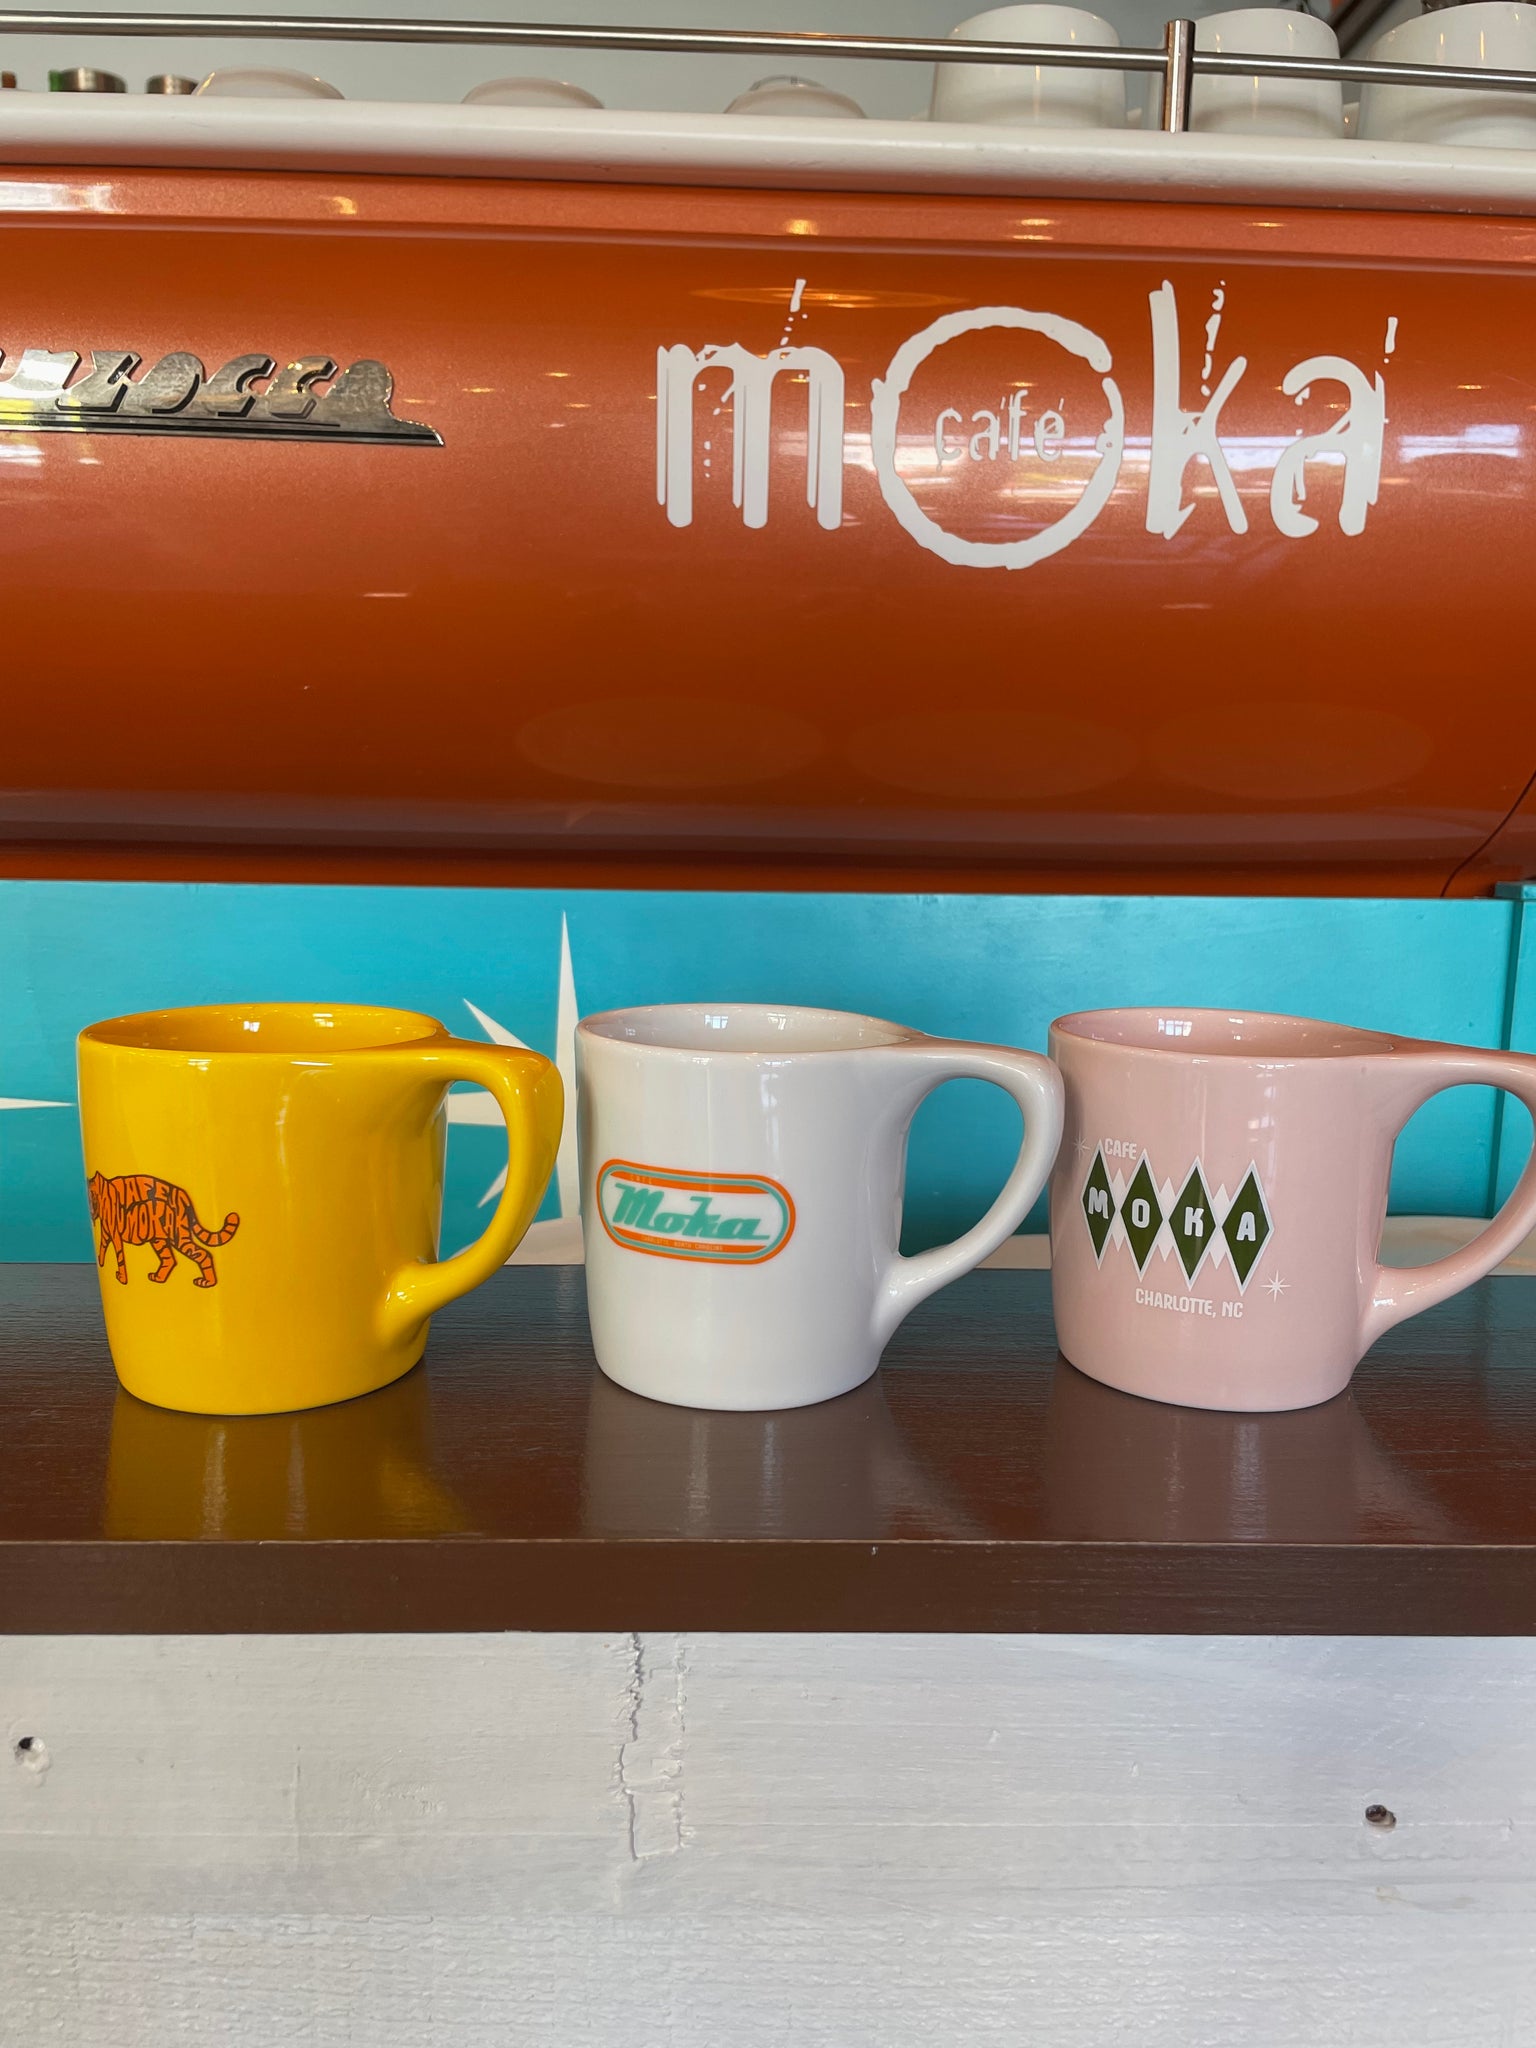 notNeutral Lino 10 oz Mug – Cafe Moka